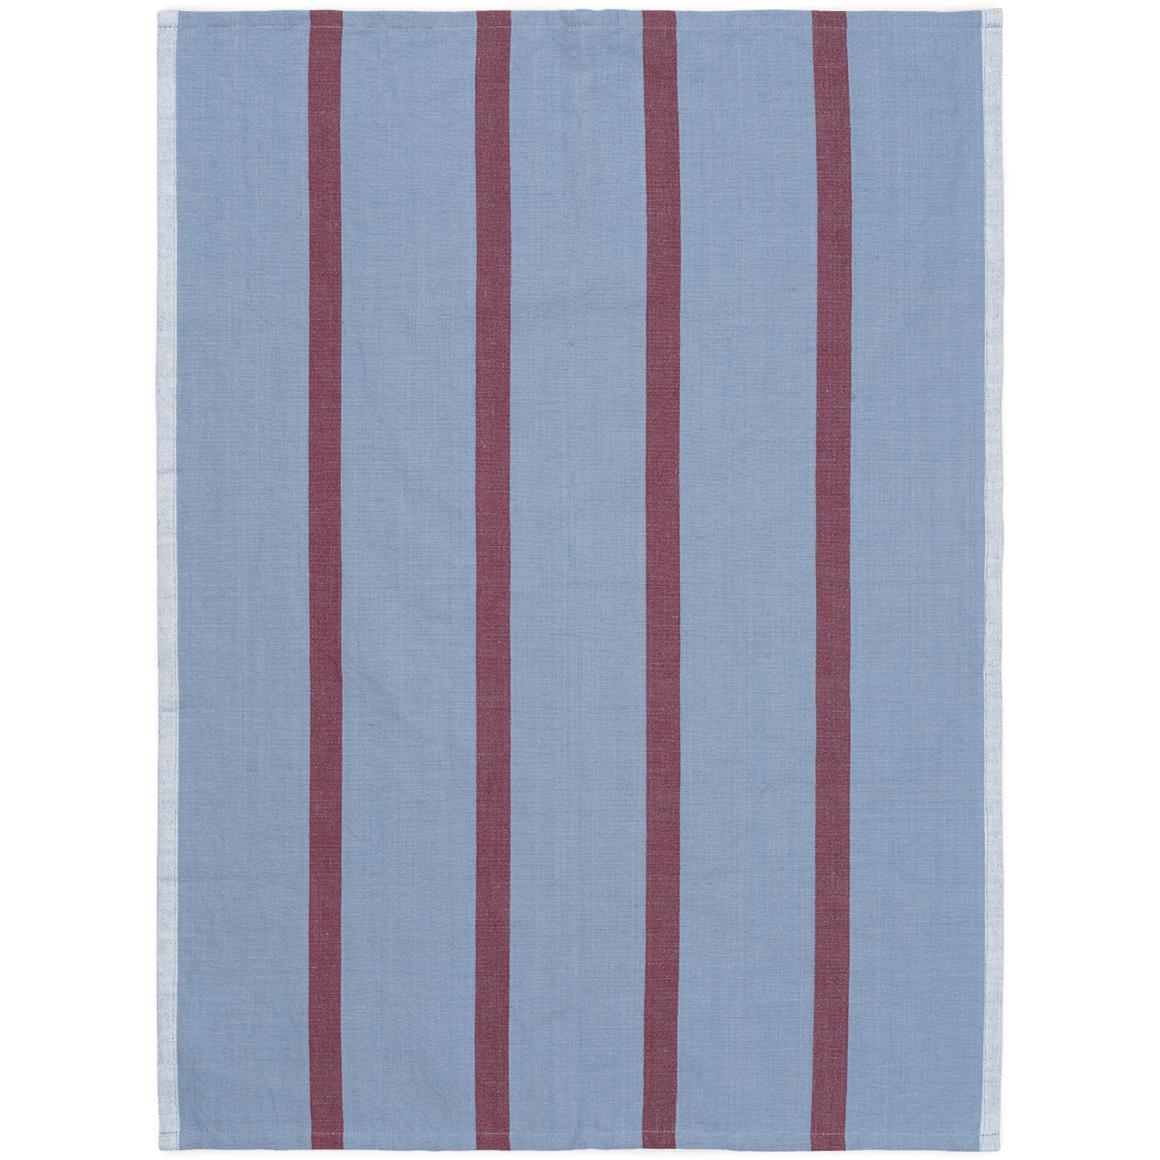 Ferm Living Hale Tea Towel, Faded Blue/Burgundy